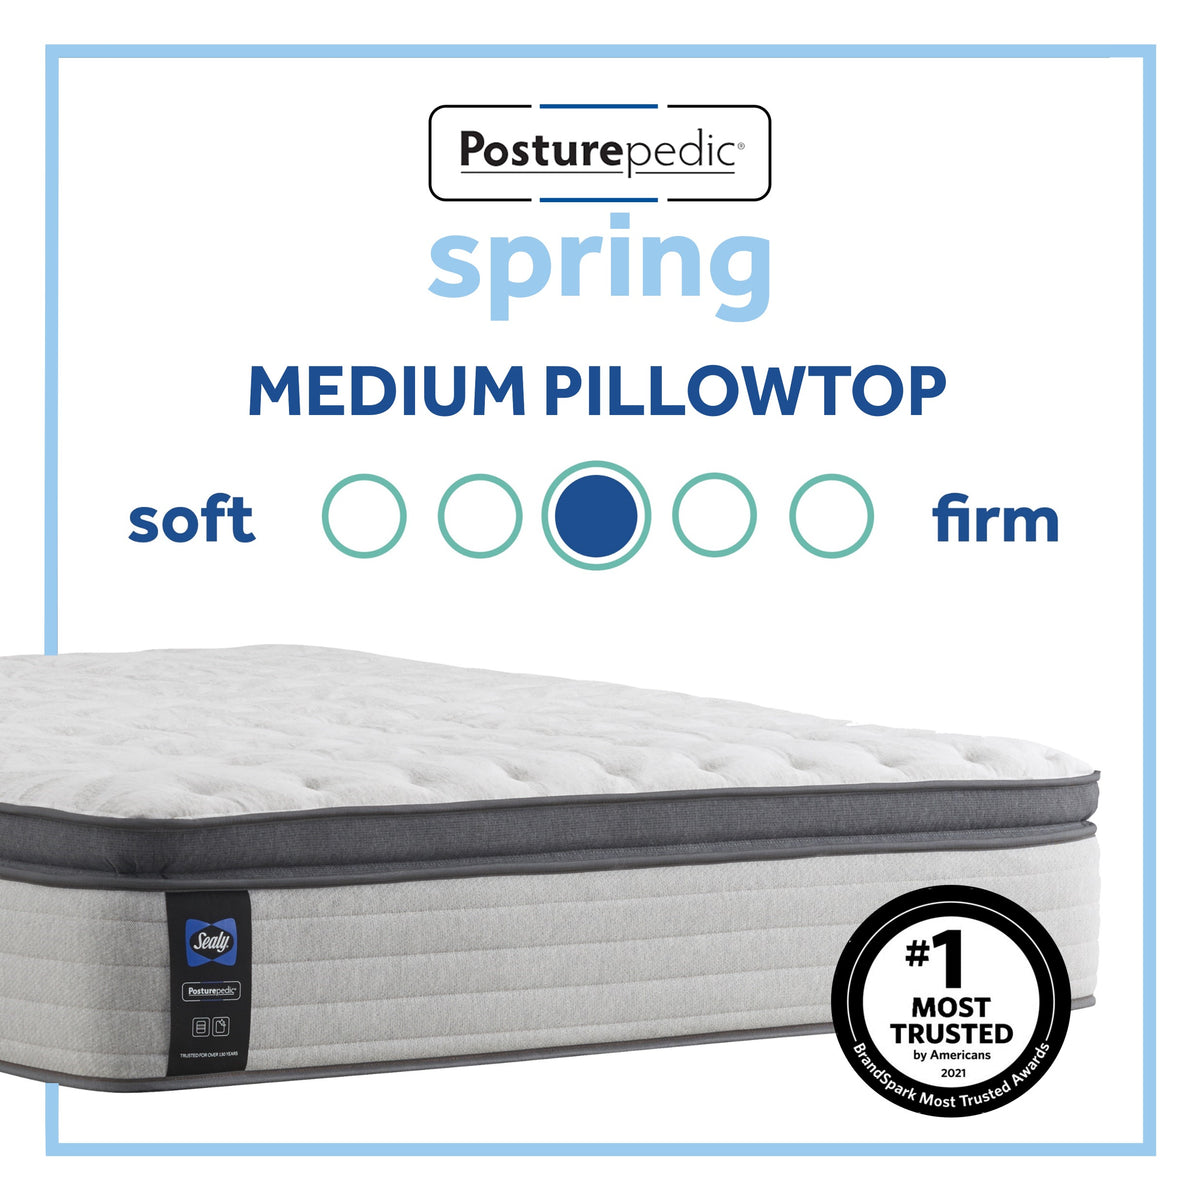 Sealy Posturepedic® Plus 12-inch Ultra Firm mattress I Satisfied II